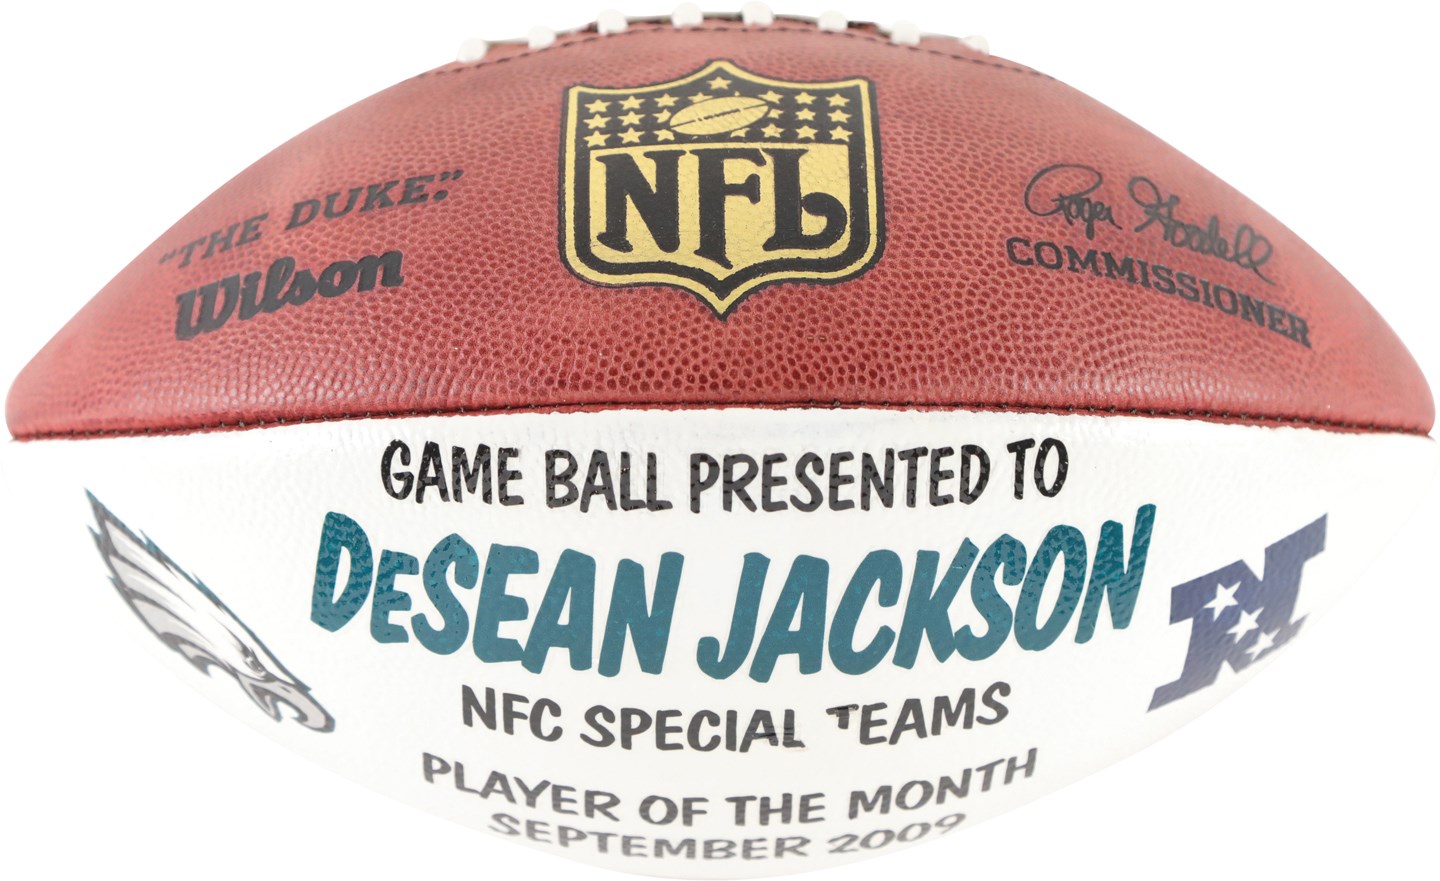 Football - September 2009 DeSean Jackson NFC Special Teams Player of the Month Presentation Football